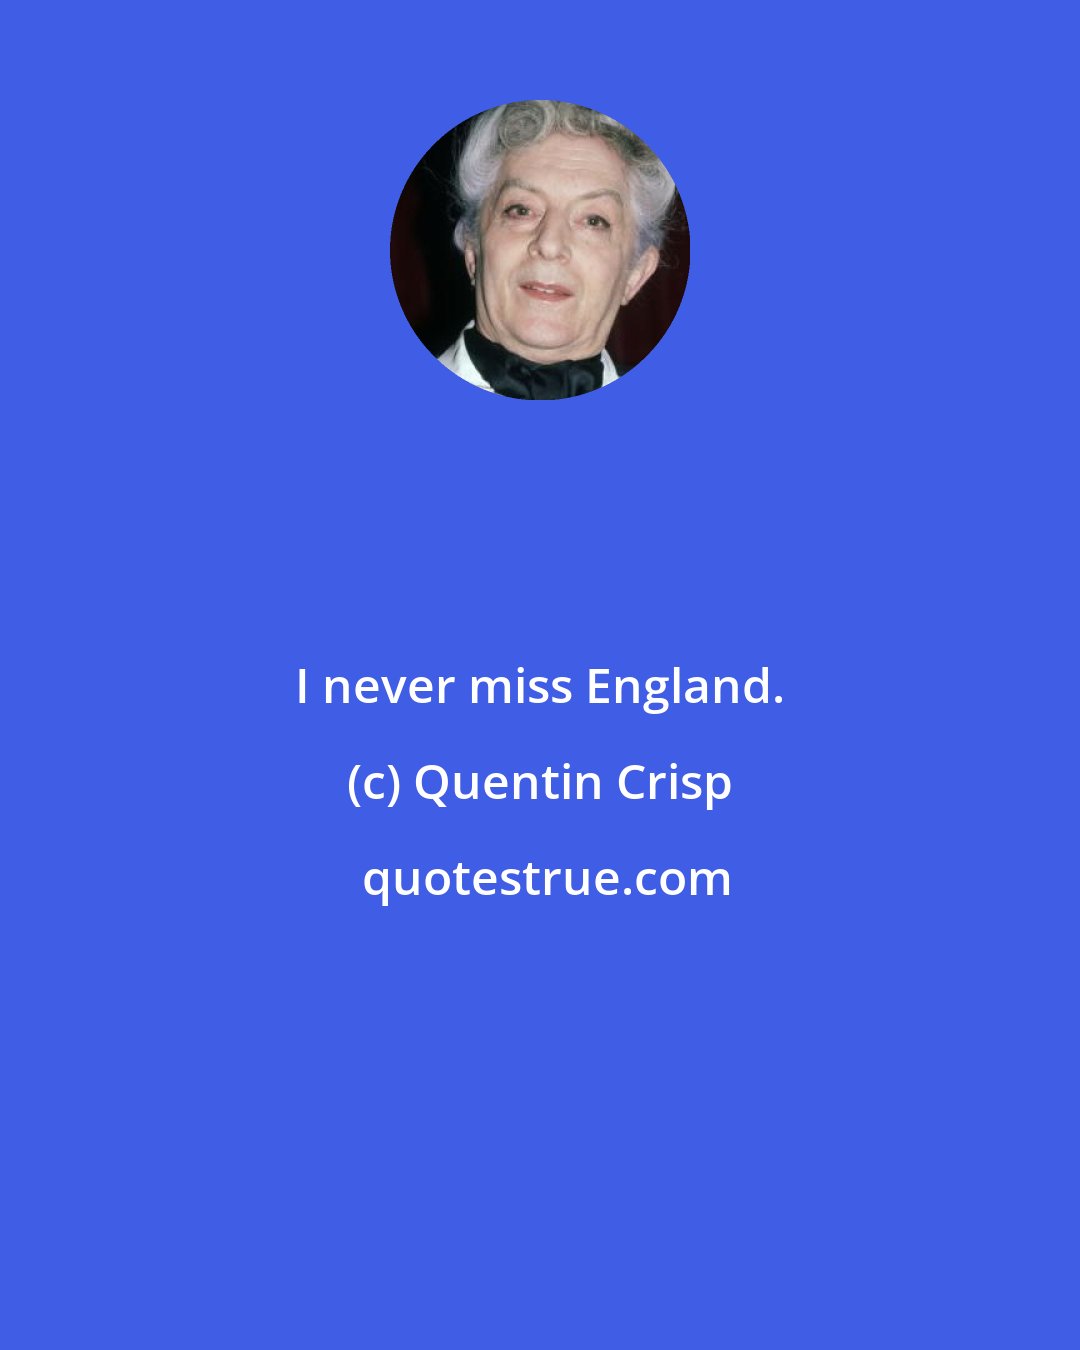 Quentin Crisp: I never miss England.